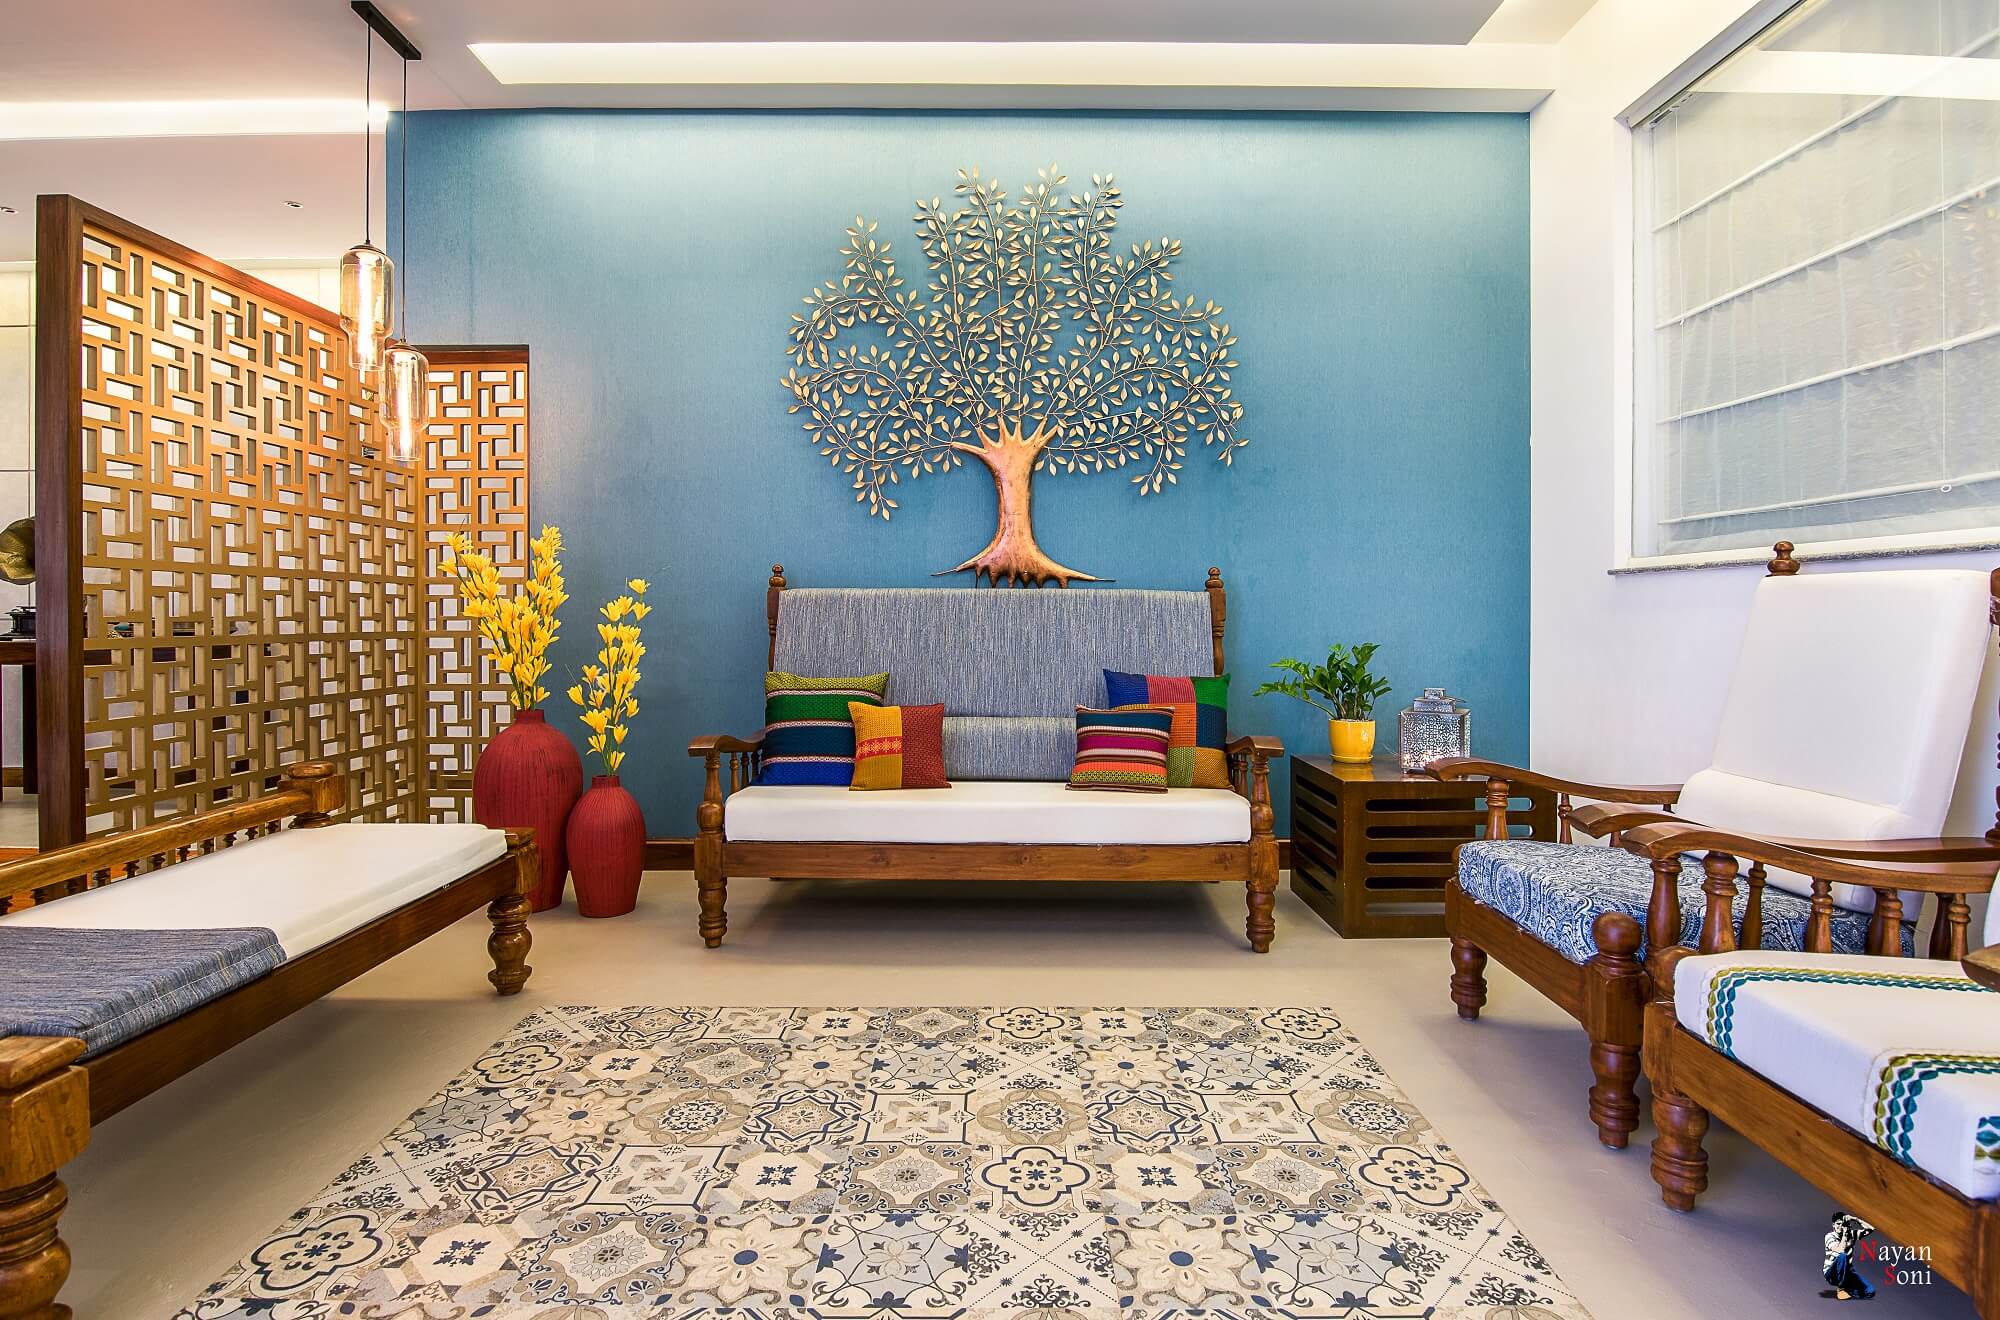 Living Room Designs Indian Apartments The Rameshs’ Desi-global, Green